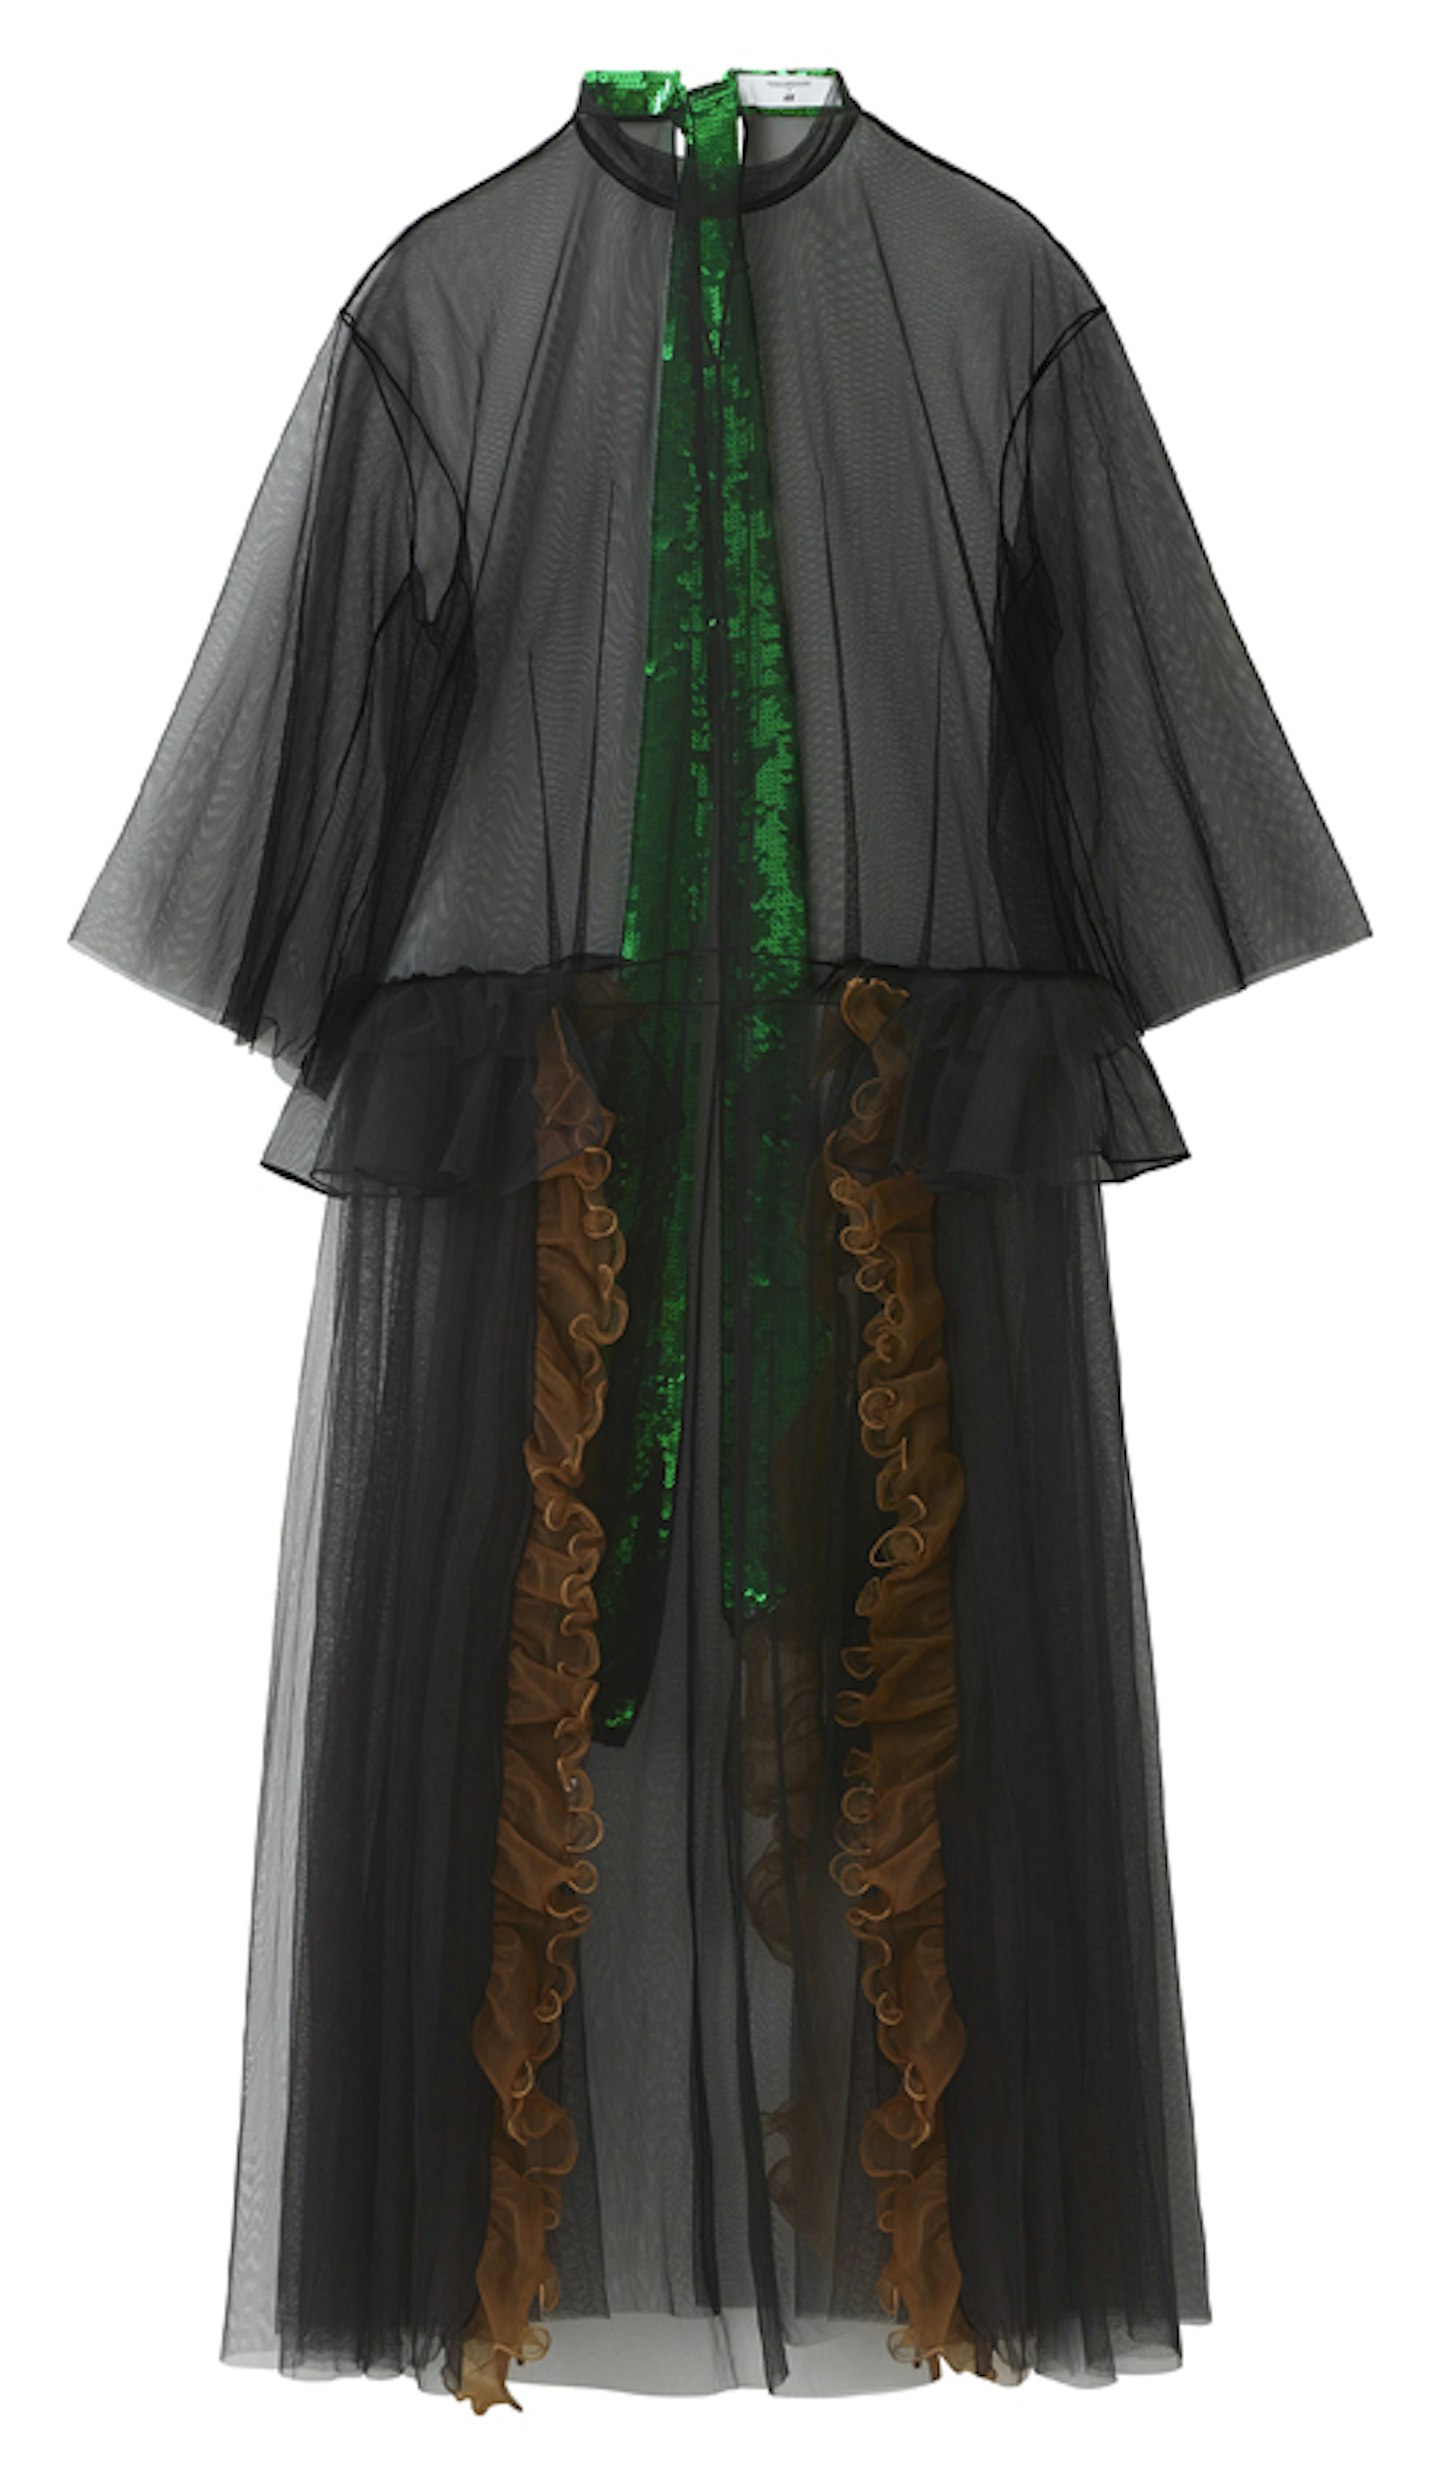 TOGA ARCHIVES x H&M, Sheer Dress, £119.99